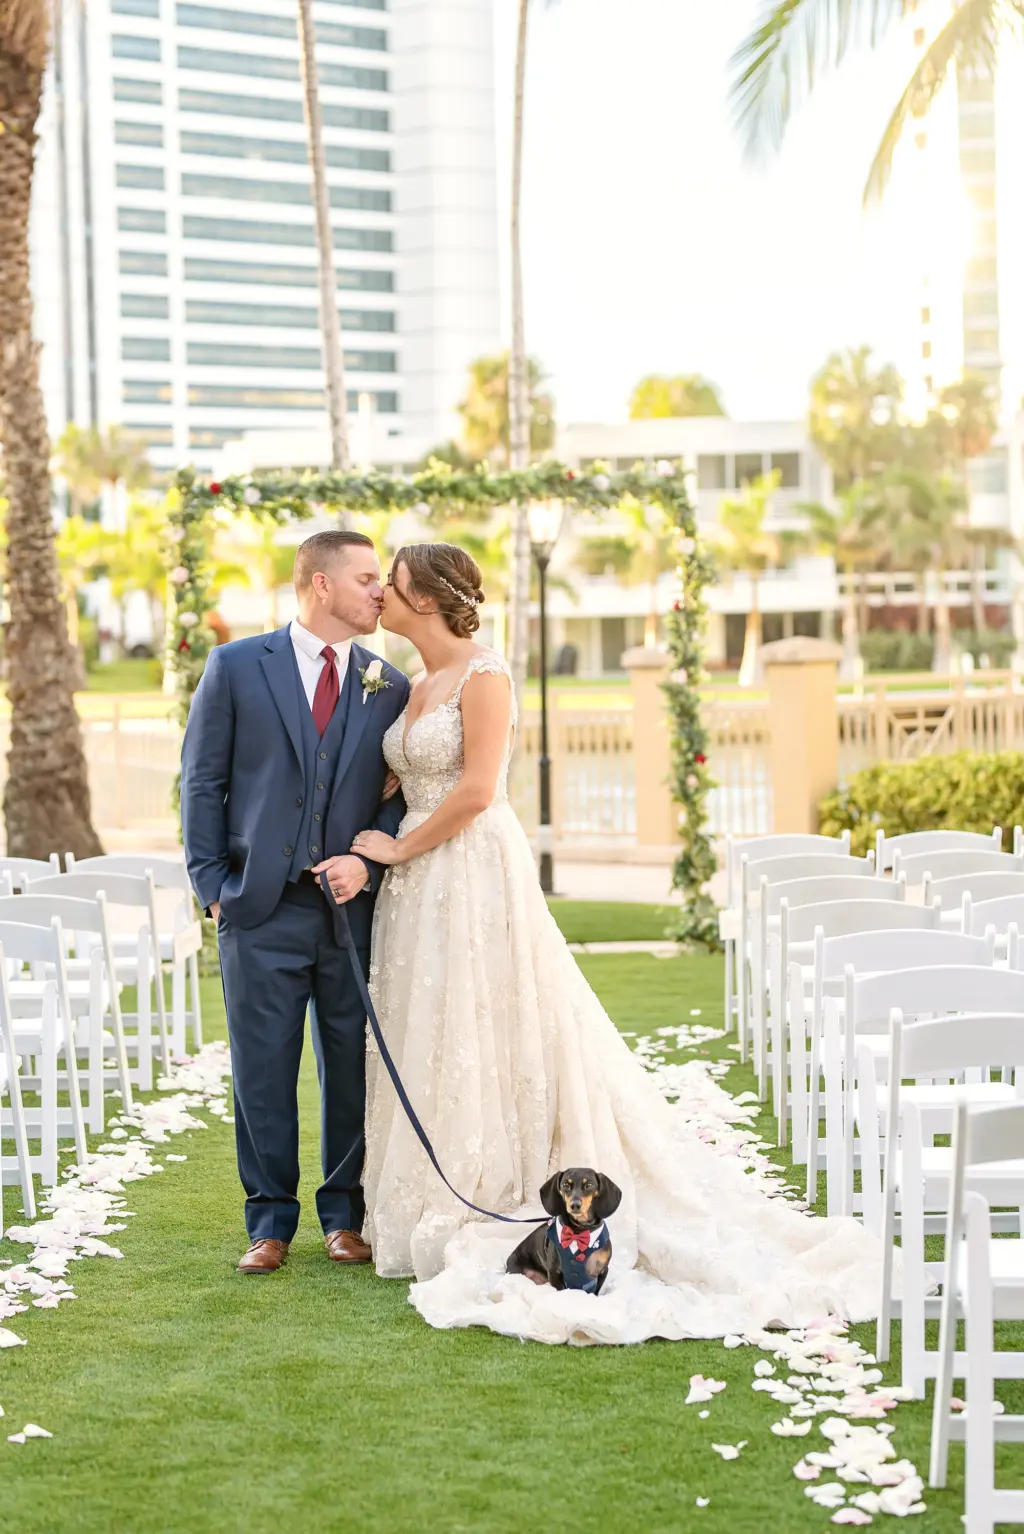 Bride and Groom Just Married with Dog Wedding Portrait | Sarasota Dog Sitting Company FairyTail Pet Care | Wedding Dog Tuxedo with Bow Tie | Venue Ritz Carlton Sarasota